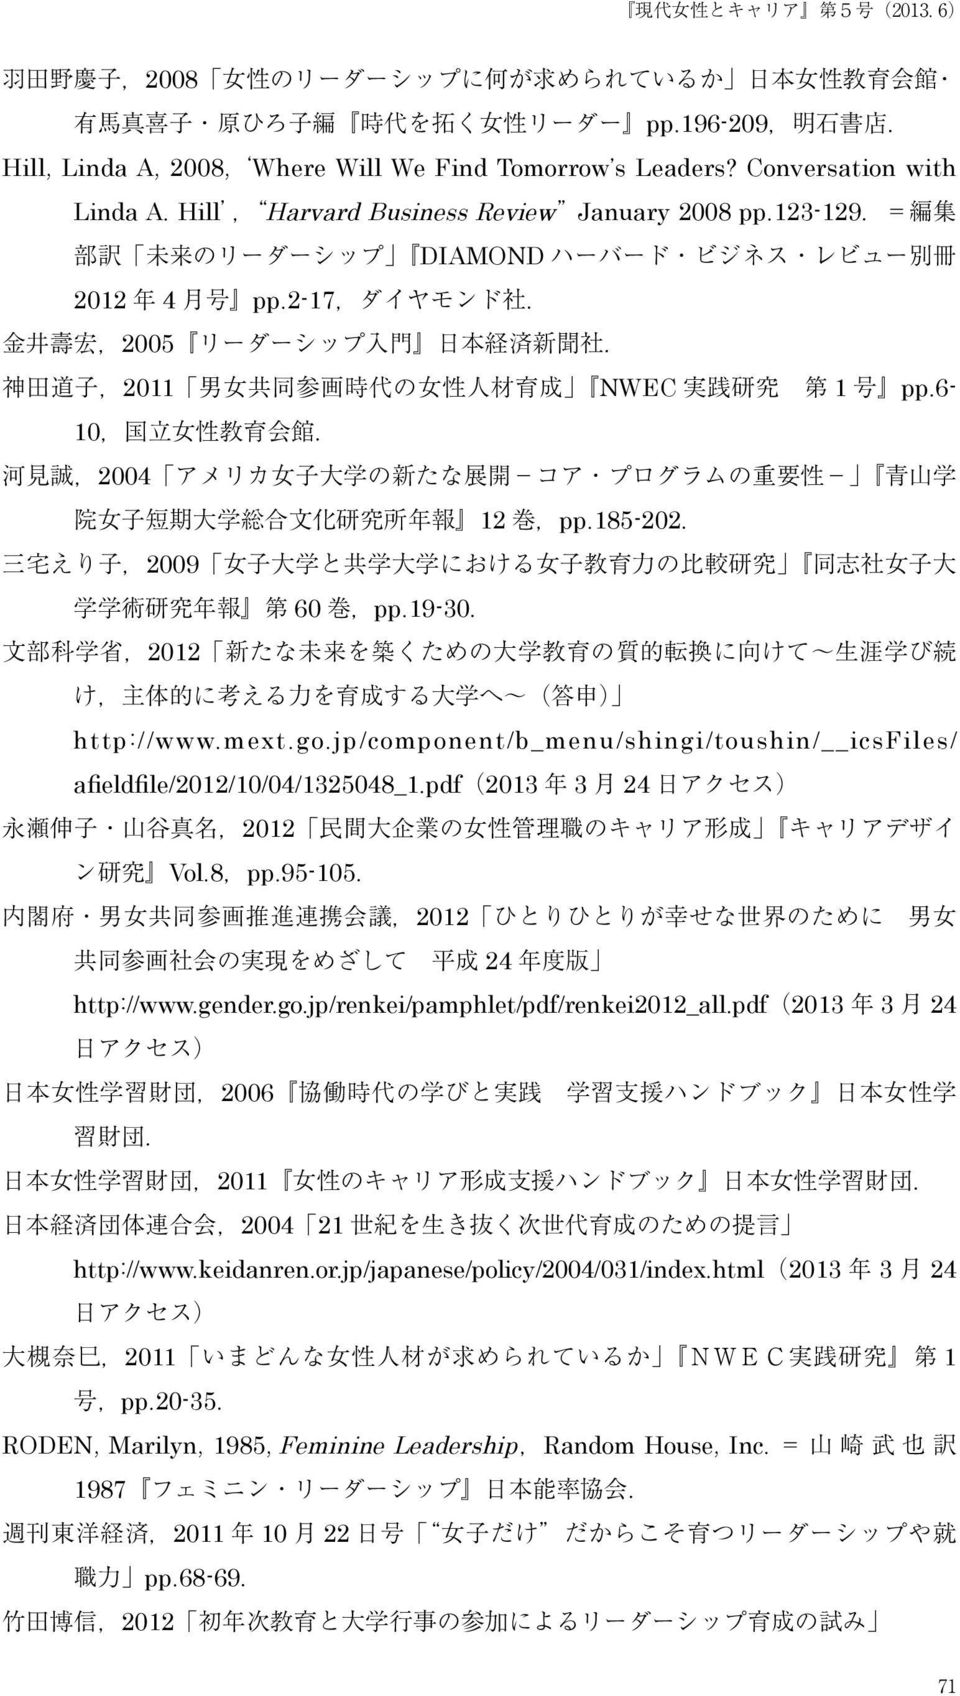 jp/component/b_menu/shingi/toushin/ icsfiles/ afieldfile/2012/10/04/1325048_1.pdf2013 3 24 2012 Vol.8pp.95-105 2012 24 http://www.gender.go.